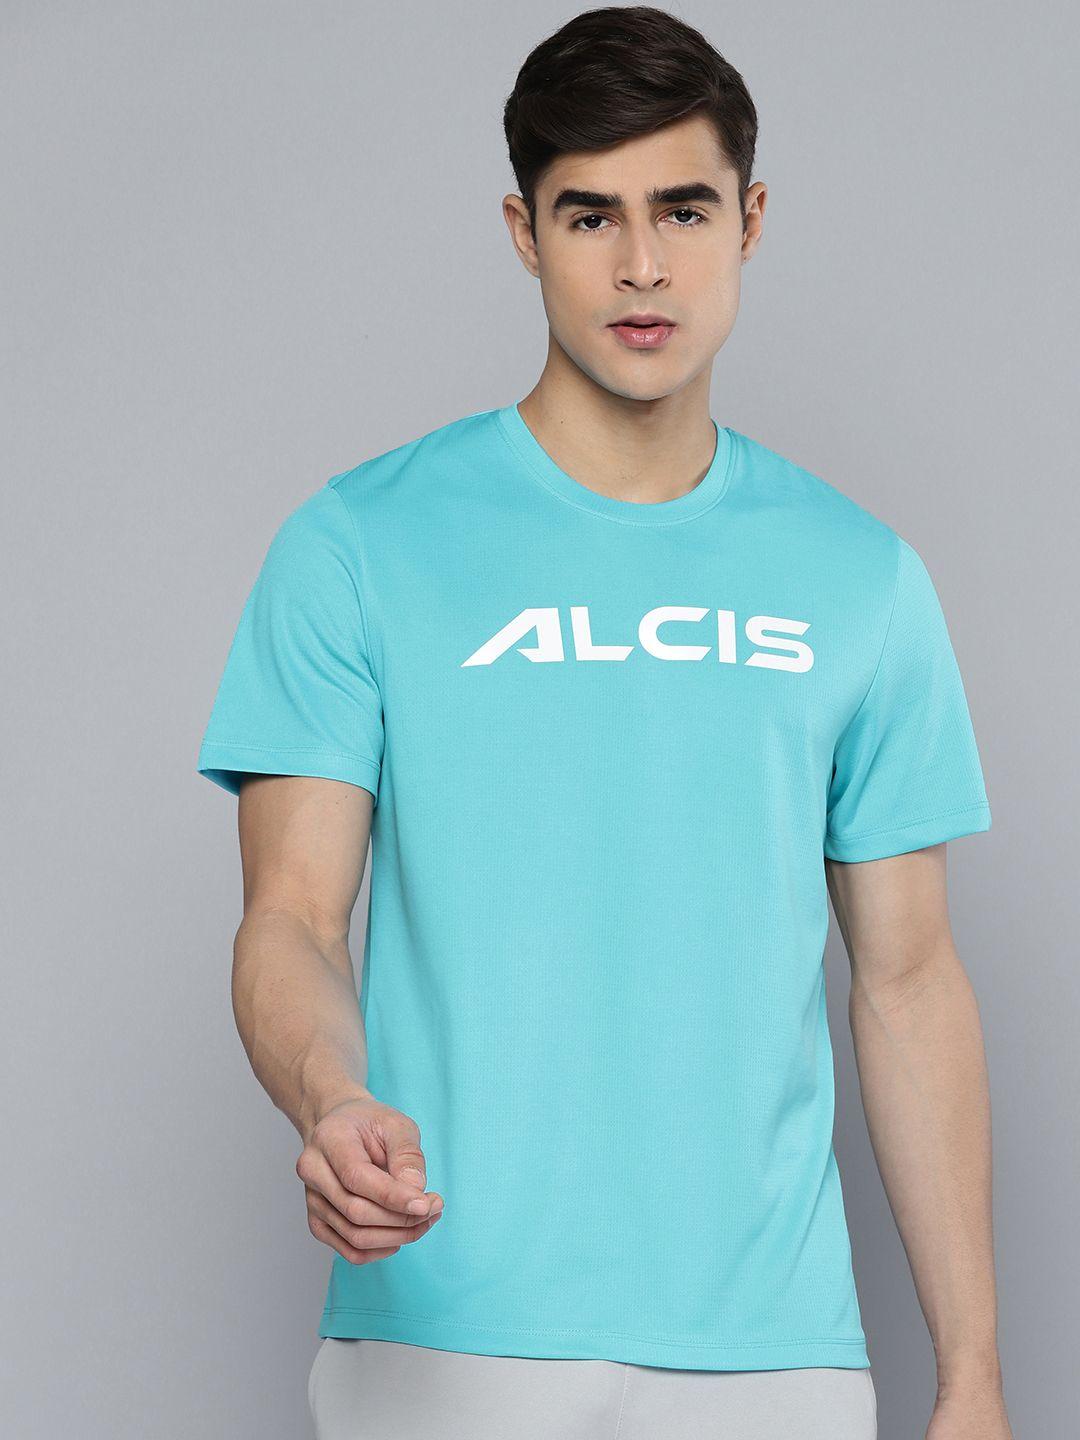 alcis brand logo printed dry tech t-shirt